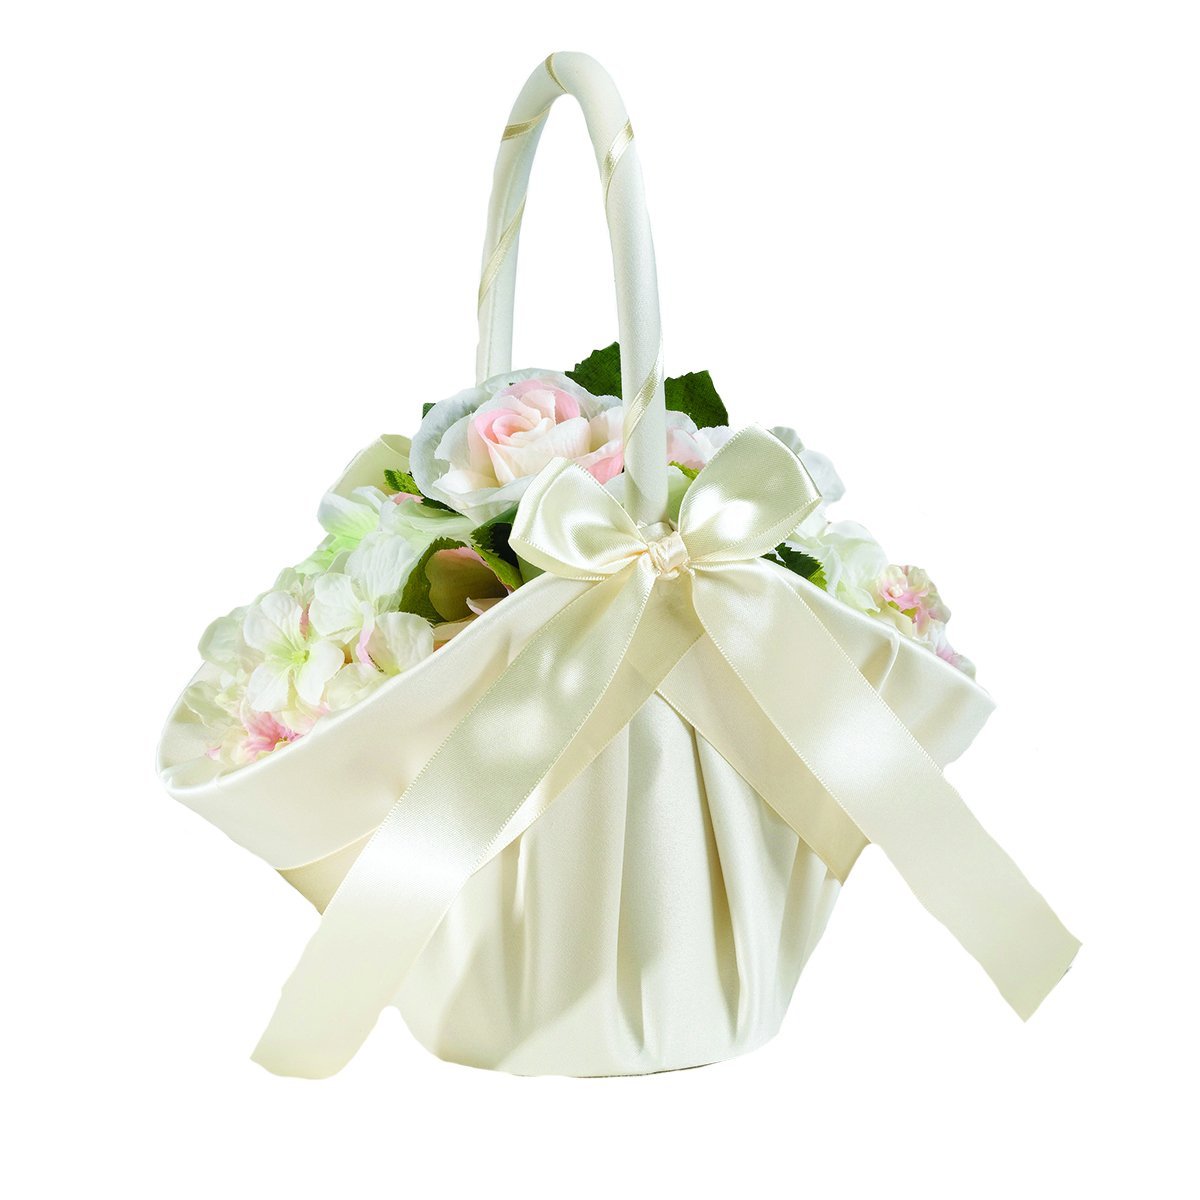 cheap flower girl baskets, flower girl baskets, rustic flower girl baskets, wedding baskets